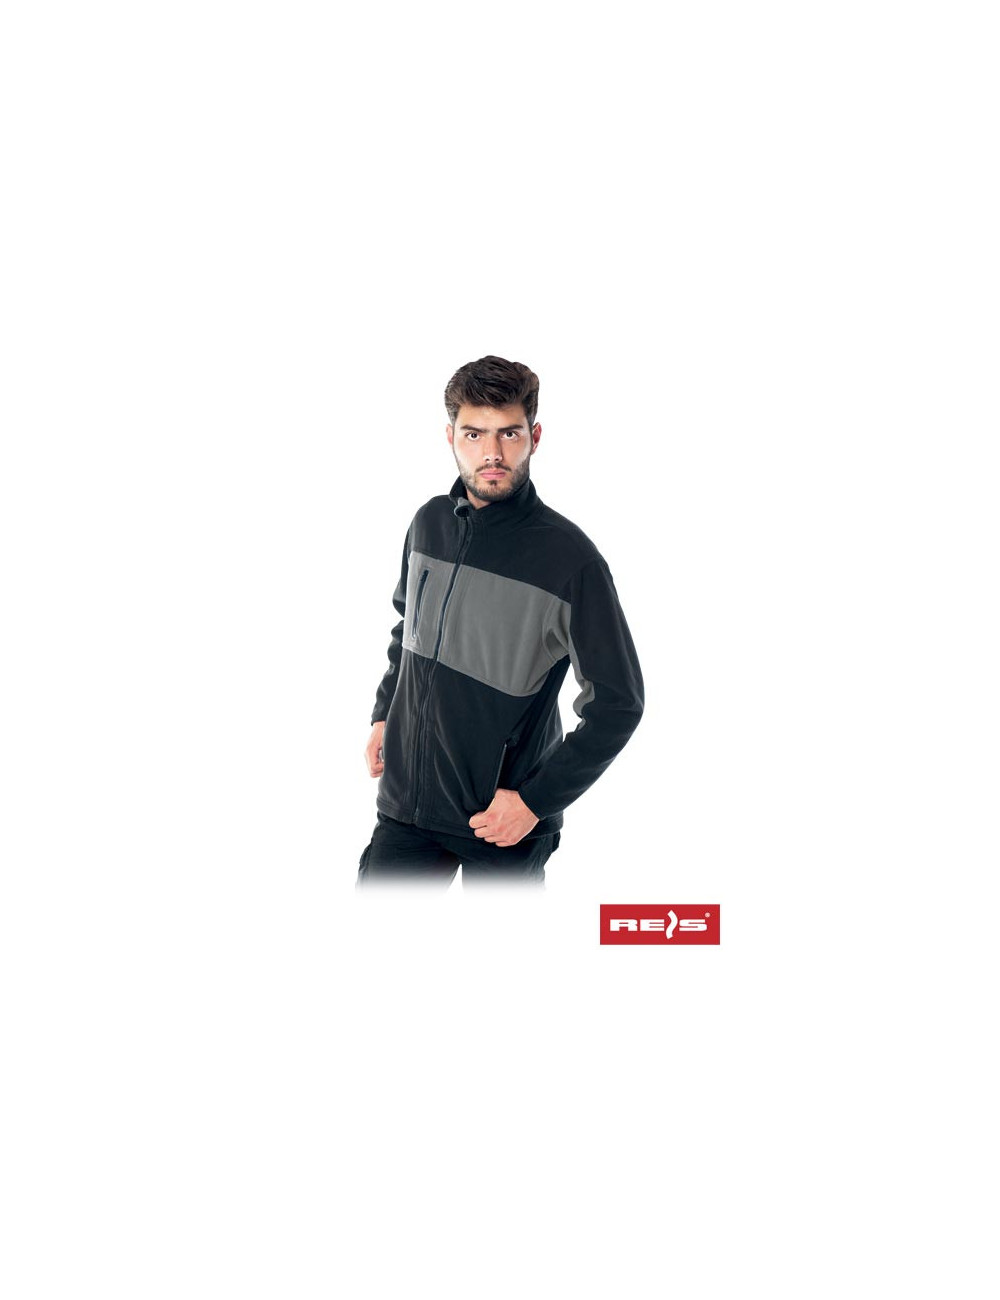 Protective fleece sweatshirt polar-doble sb gray-black Reis